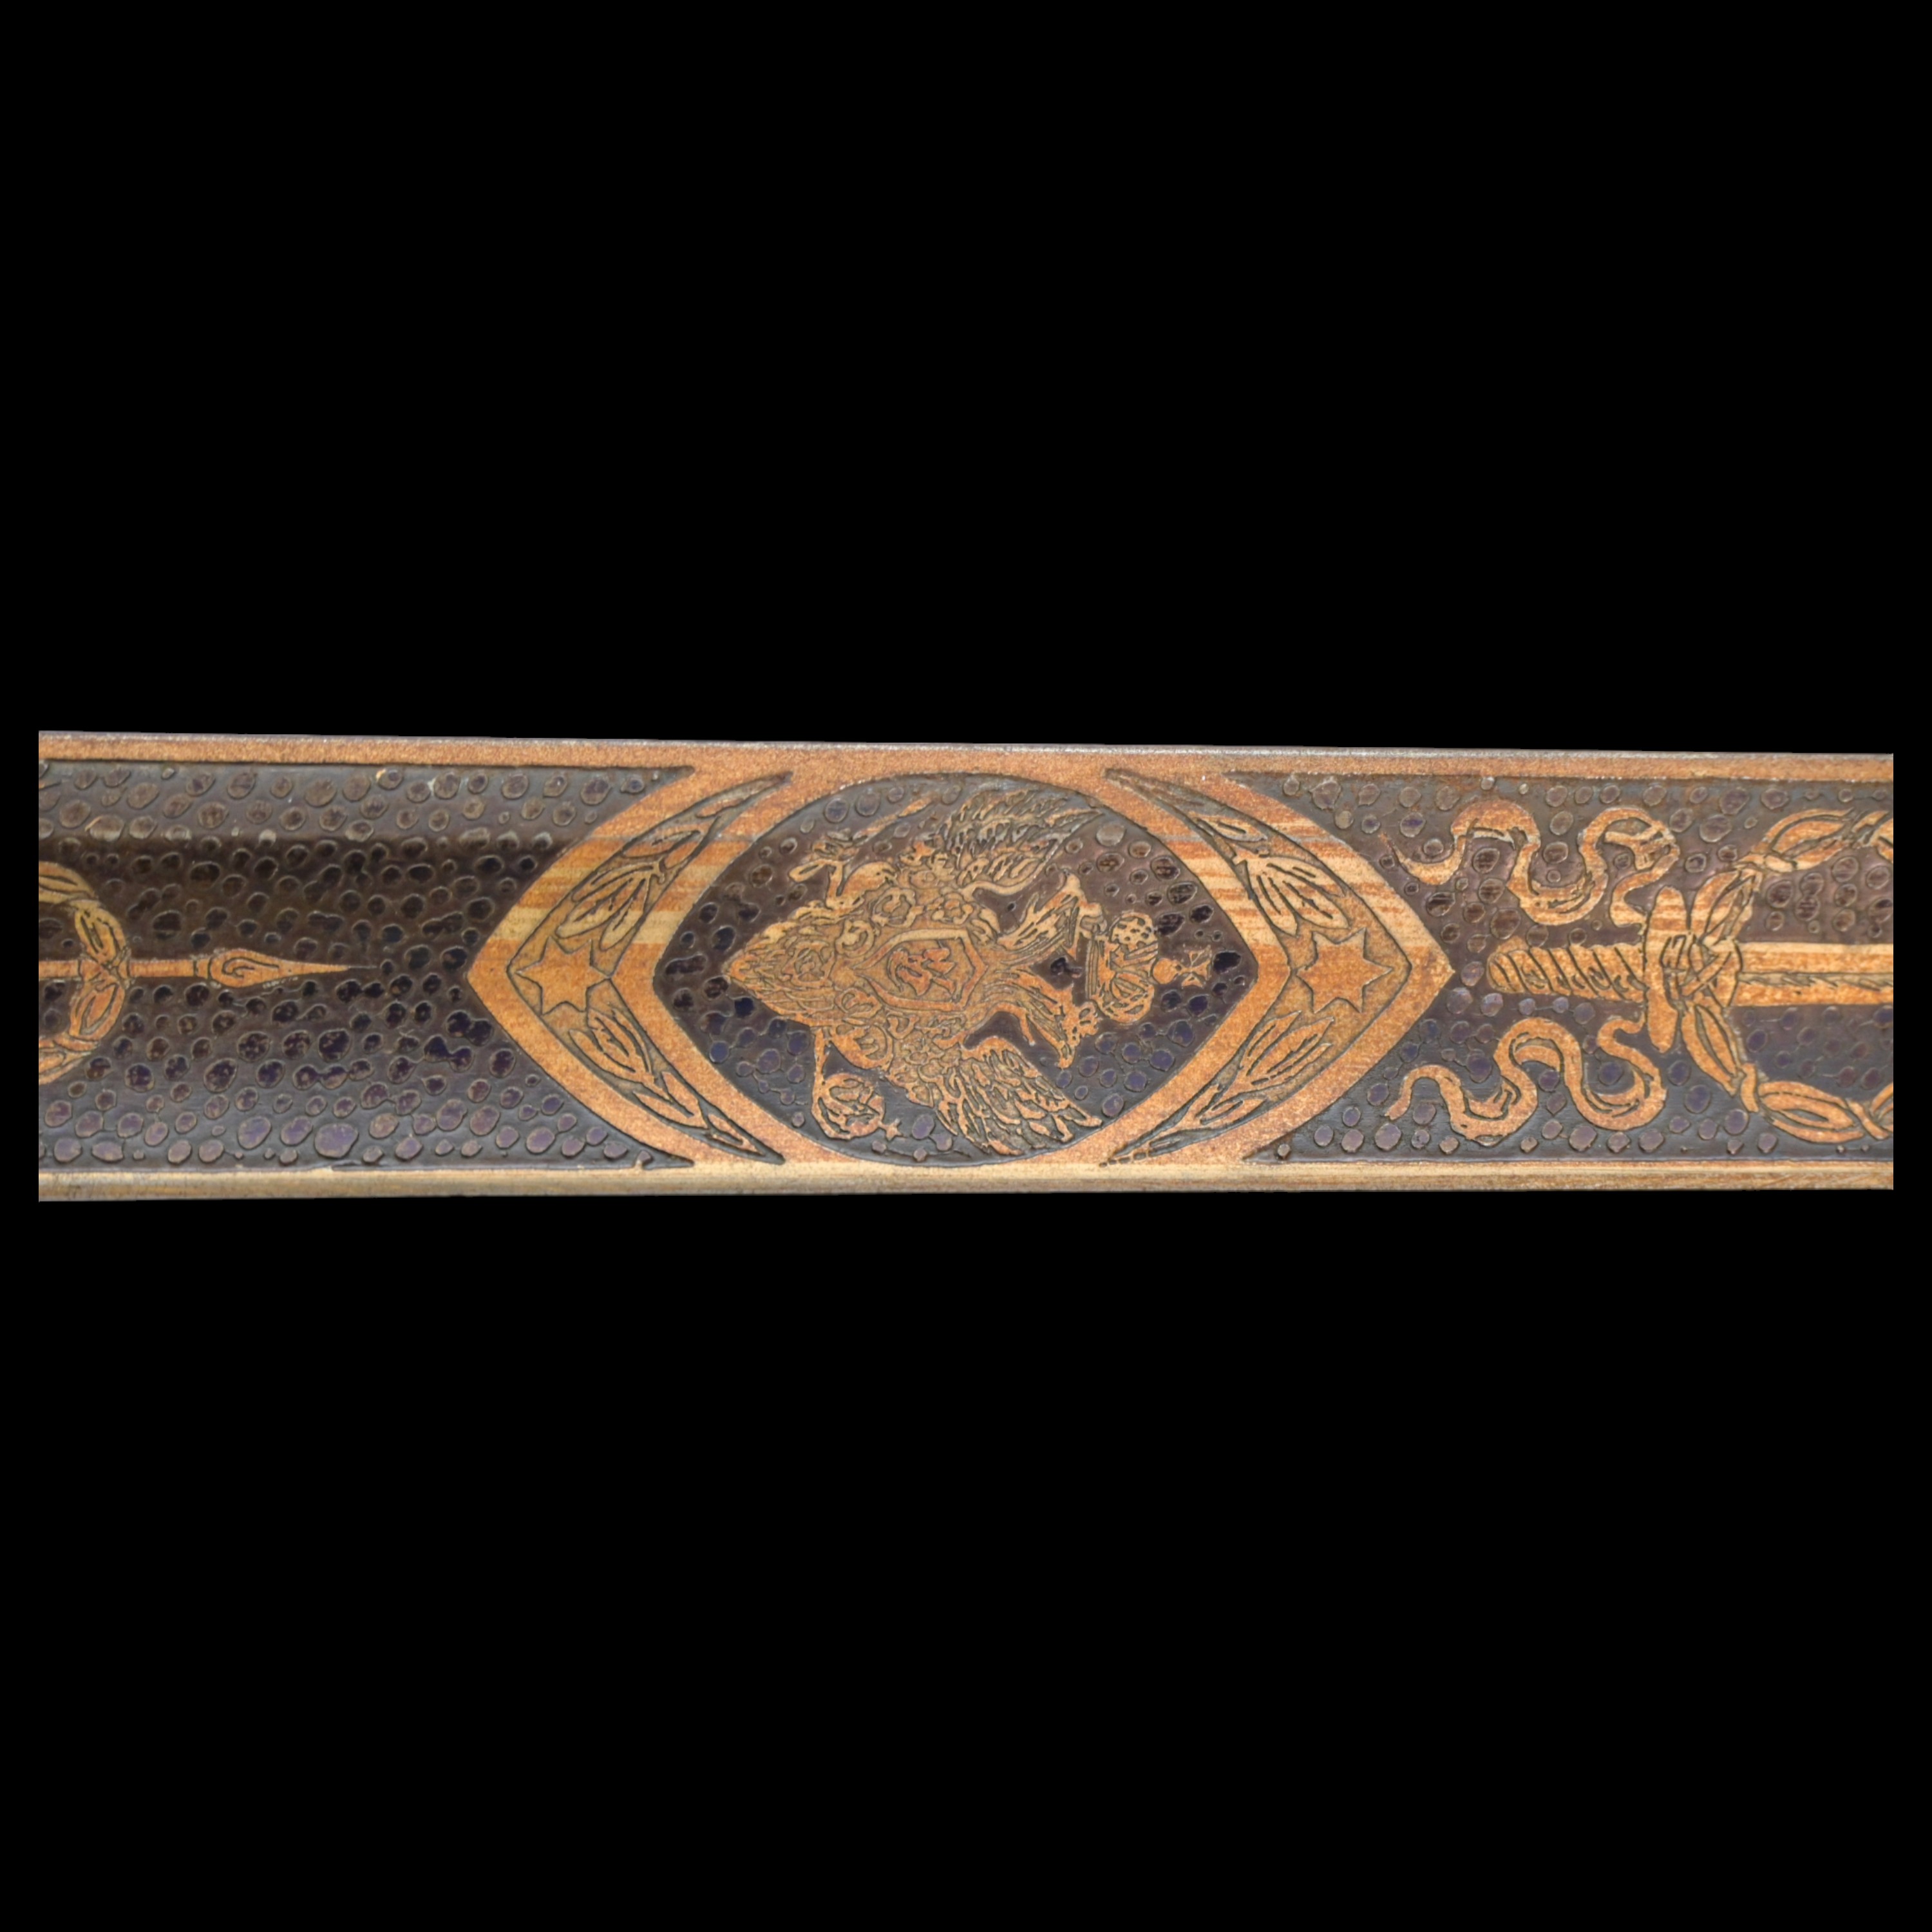 Russian sword, "For bravery" signature on the blade "I Boyarshinov, Zatoust, 1831". - Image 22 of 25